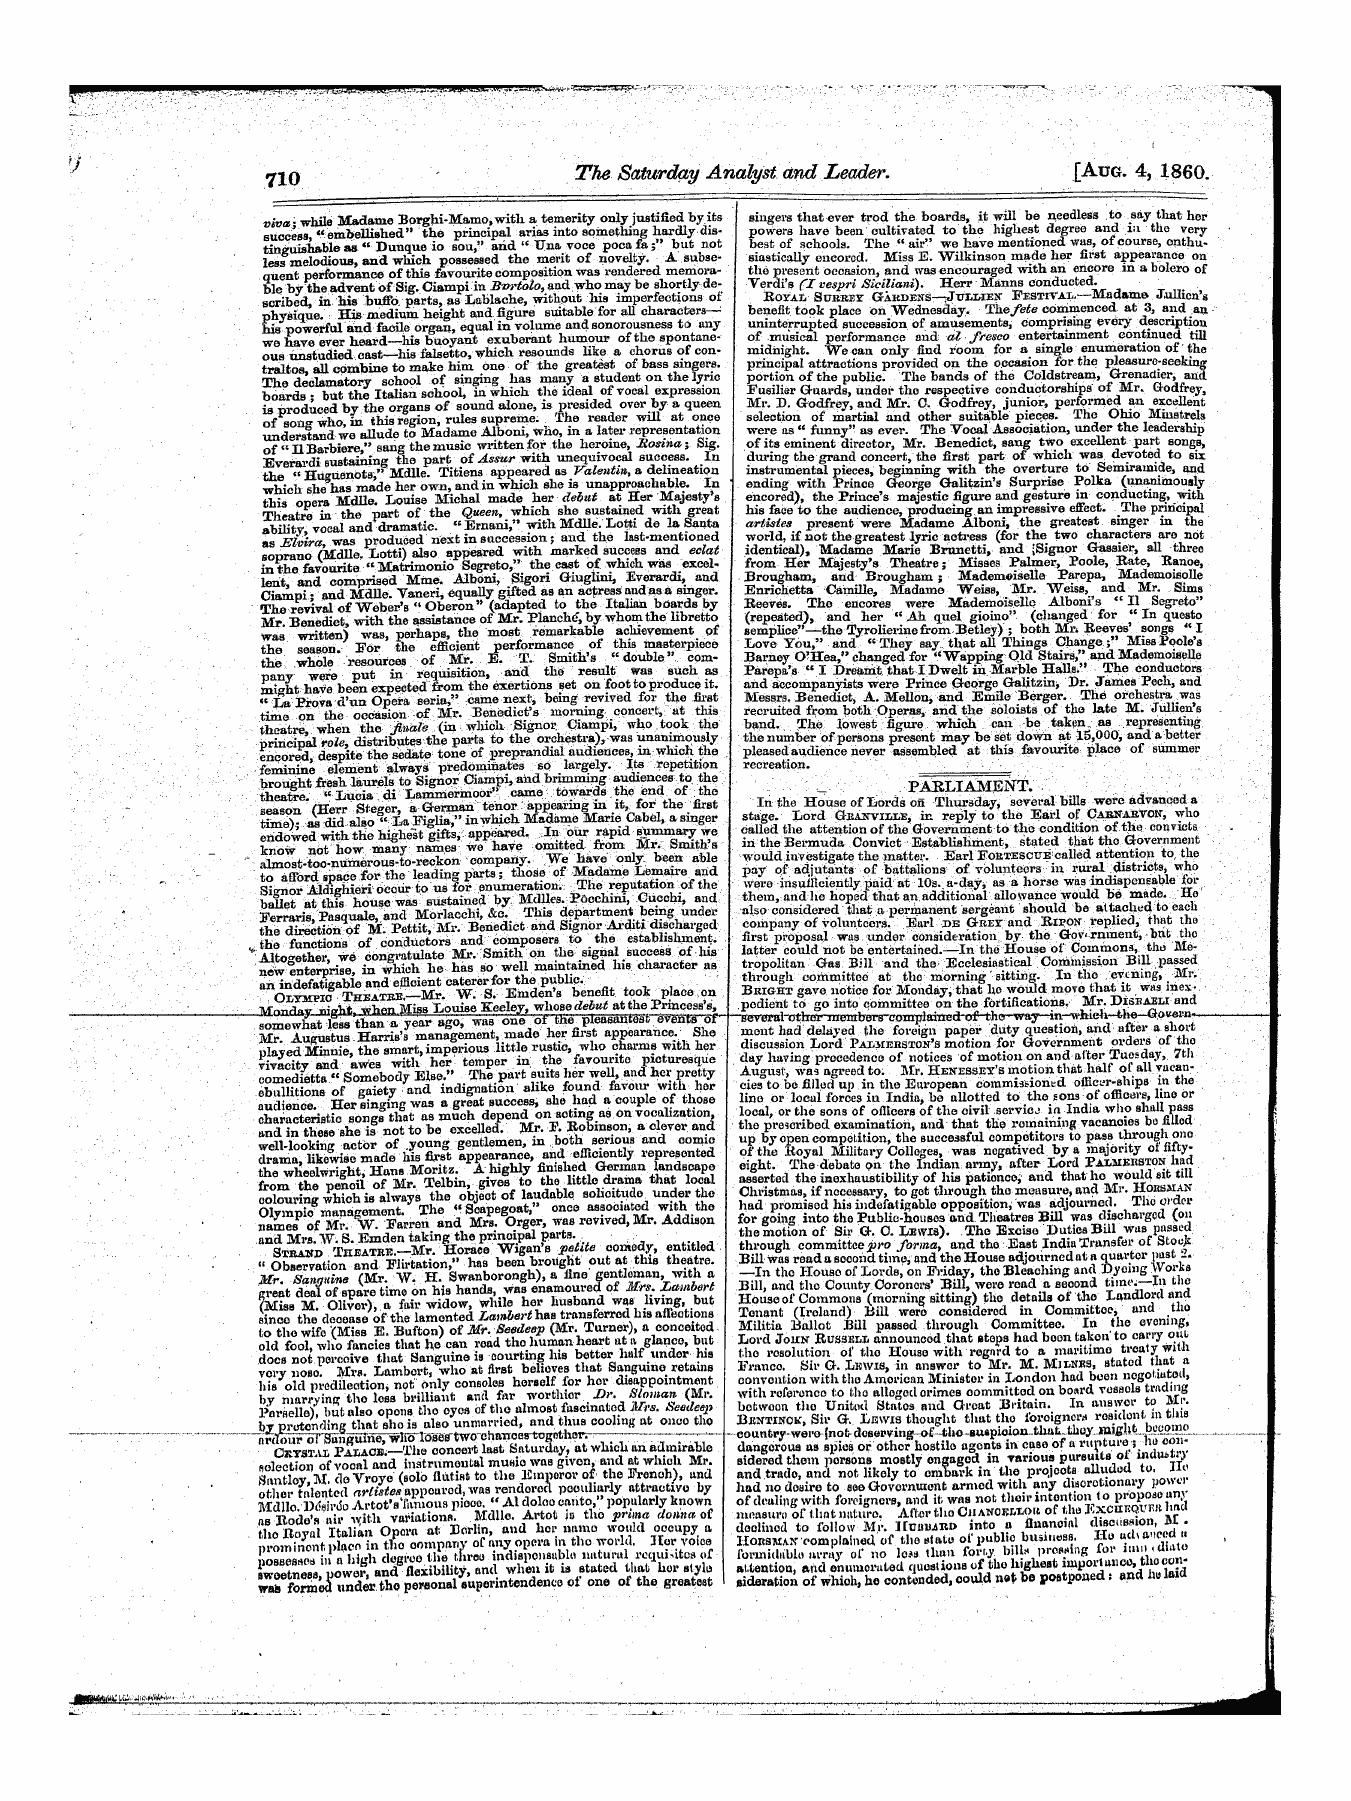 Leader (1850-1860): jS F Y, 1st edition - Parliament. Eral